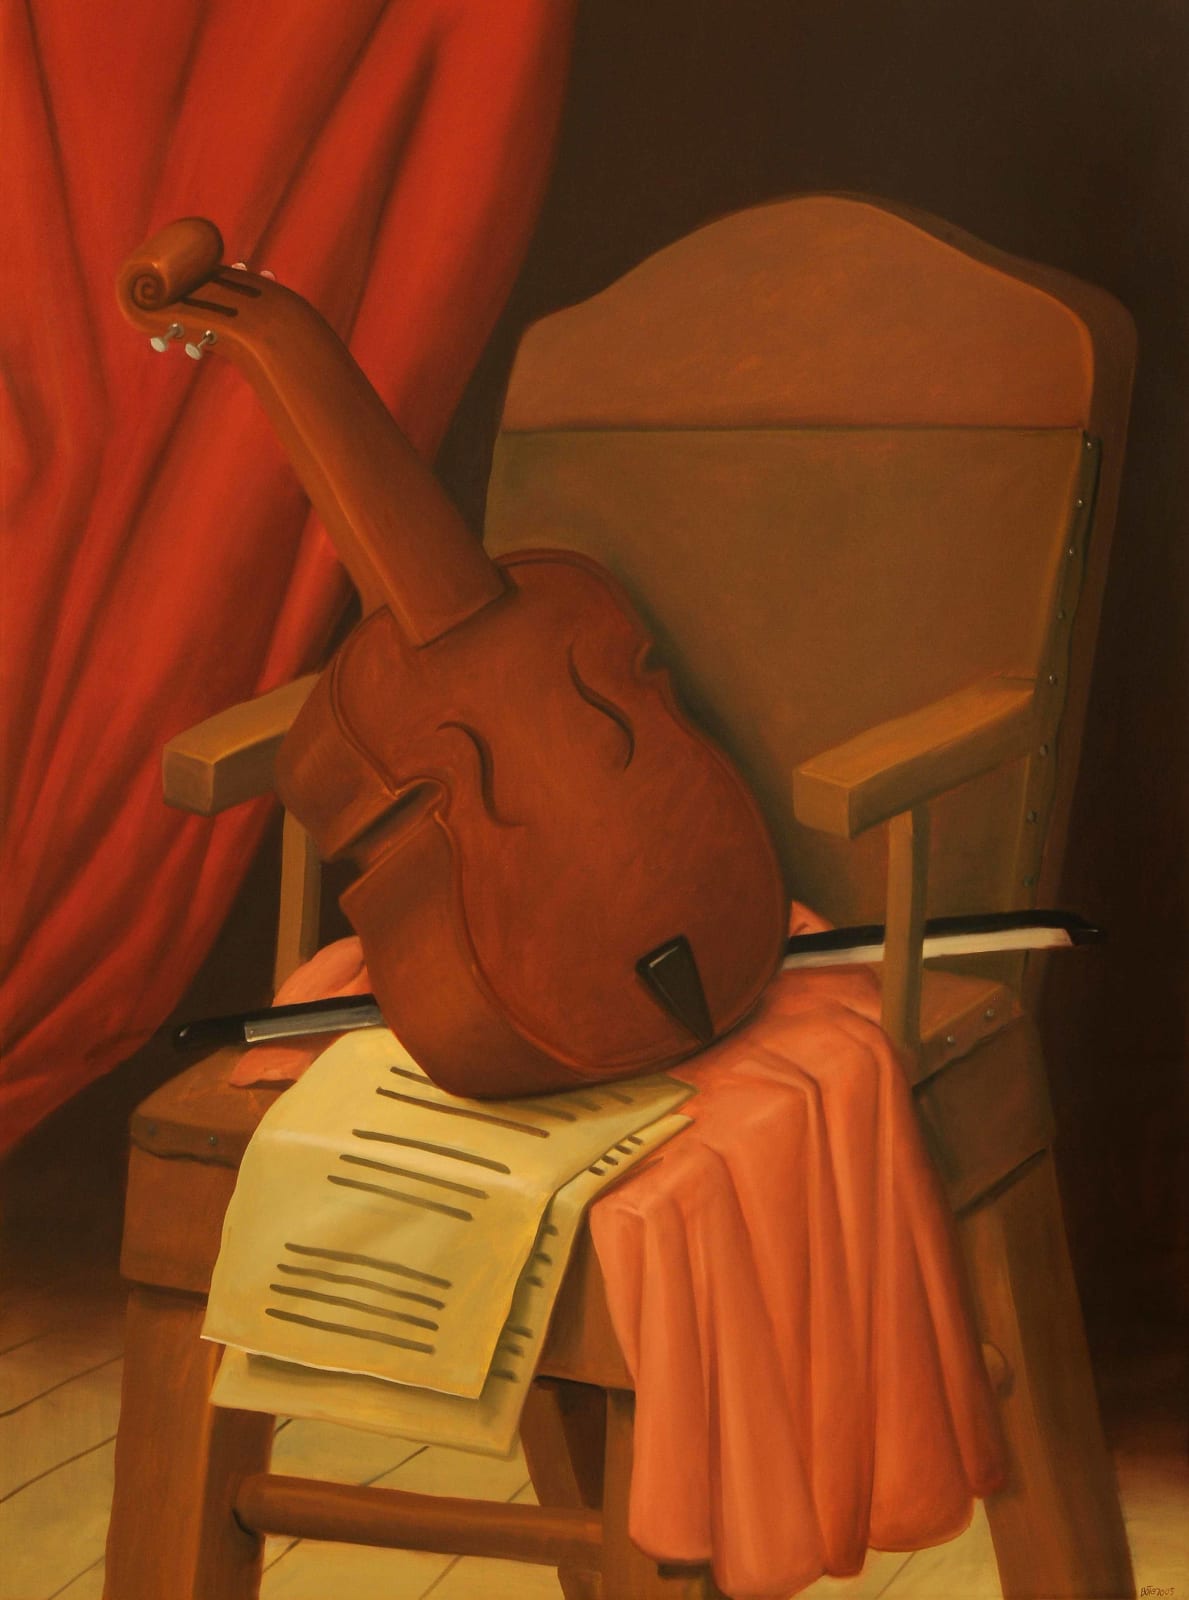 Fernando Botero, Violin on chair, 2005